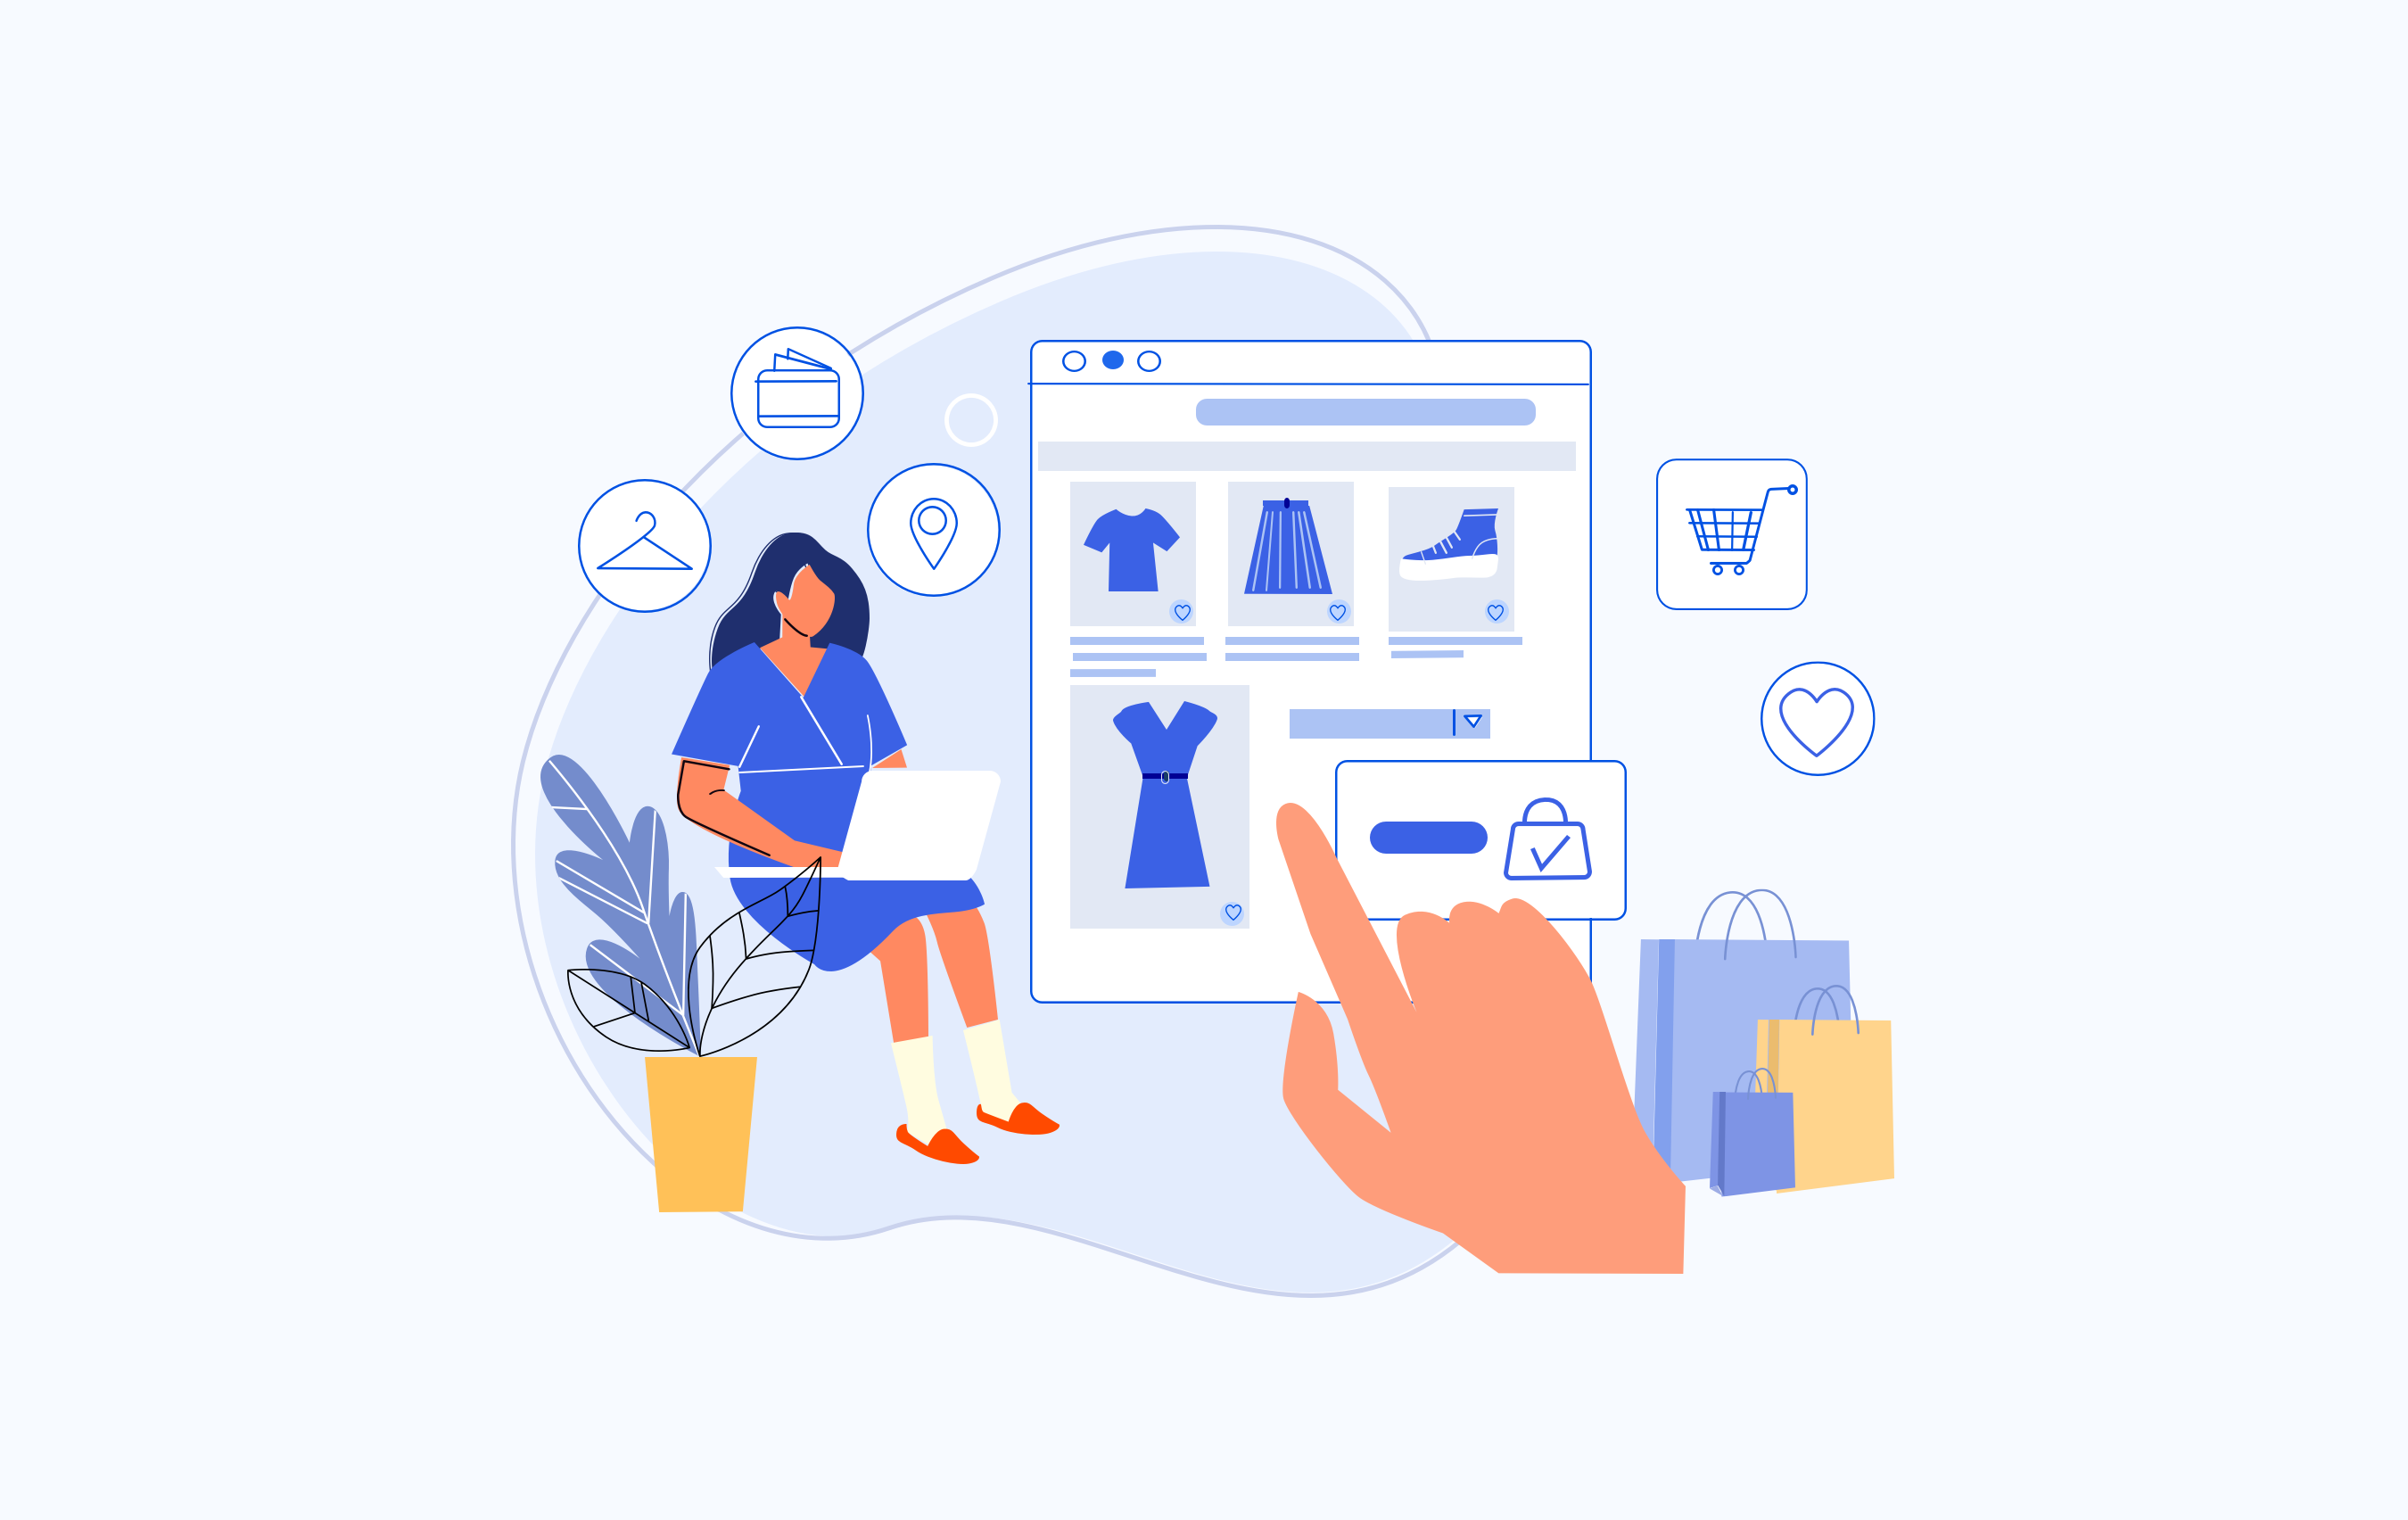 Online Shopping